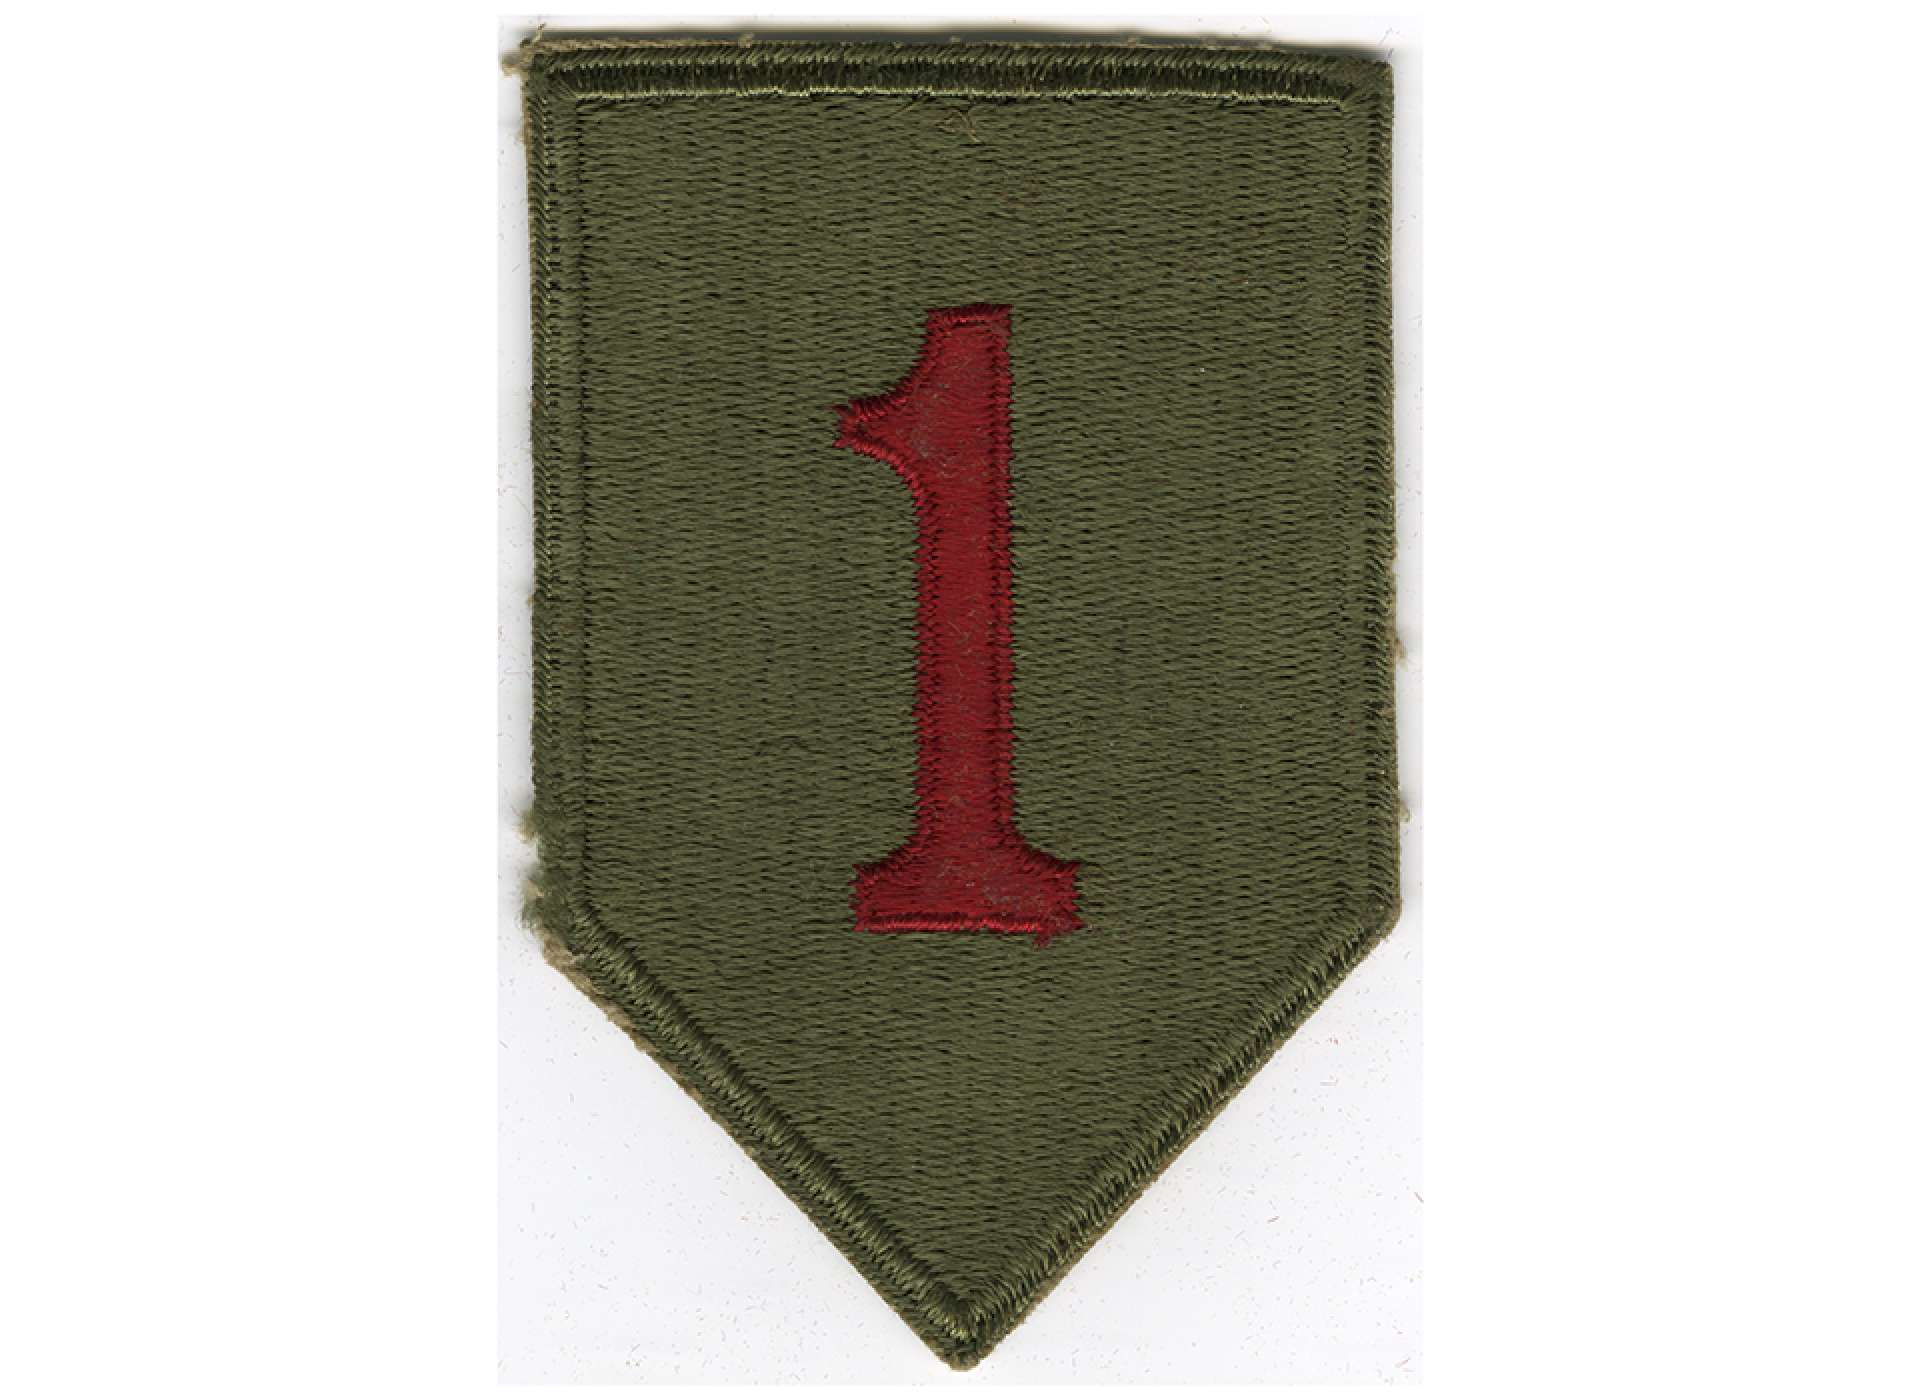 Shoulder patch for the 1st Infantry Division